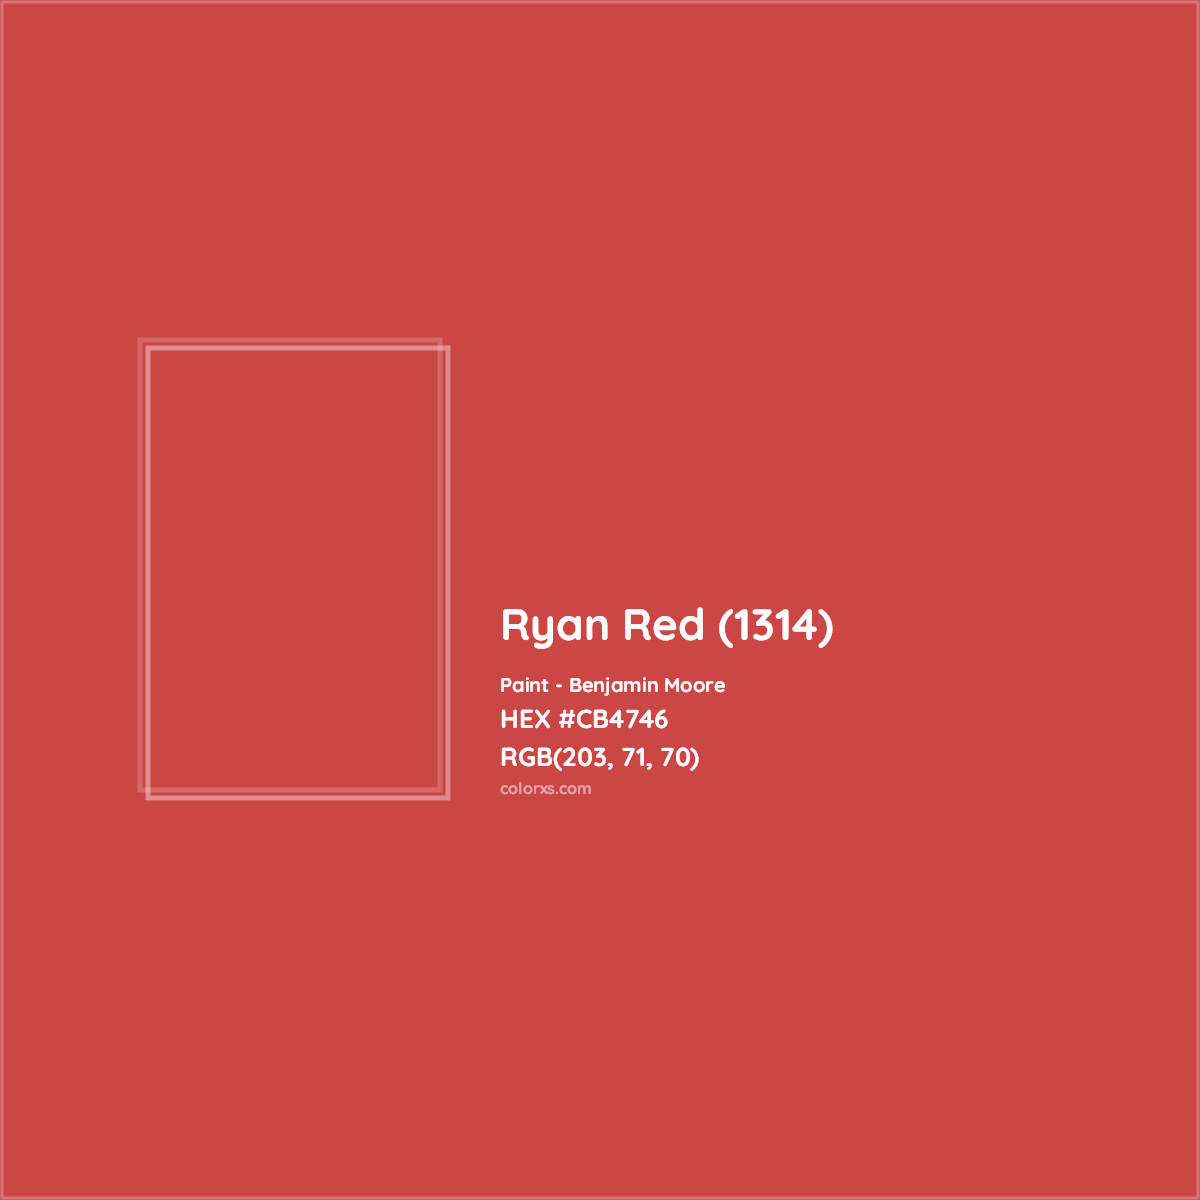 HEX #CB4746 Ryan Red (1314) Paint Benjamin Moore - Color Code